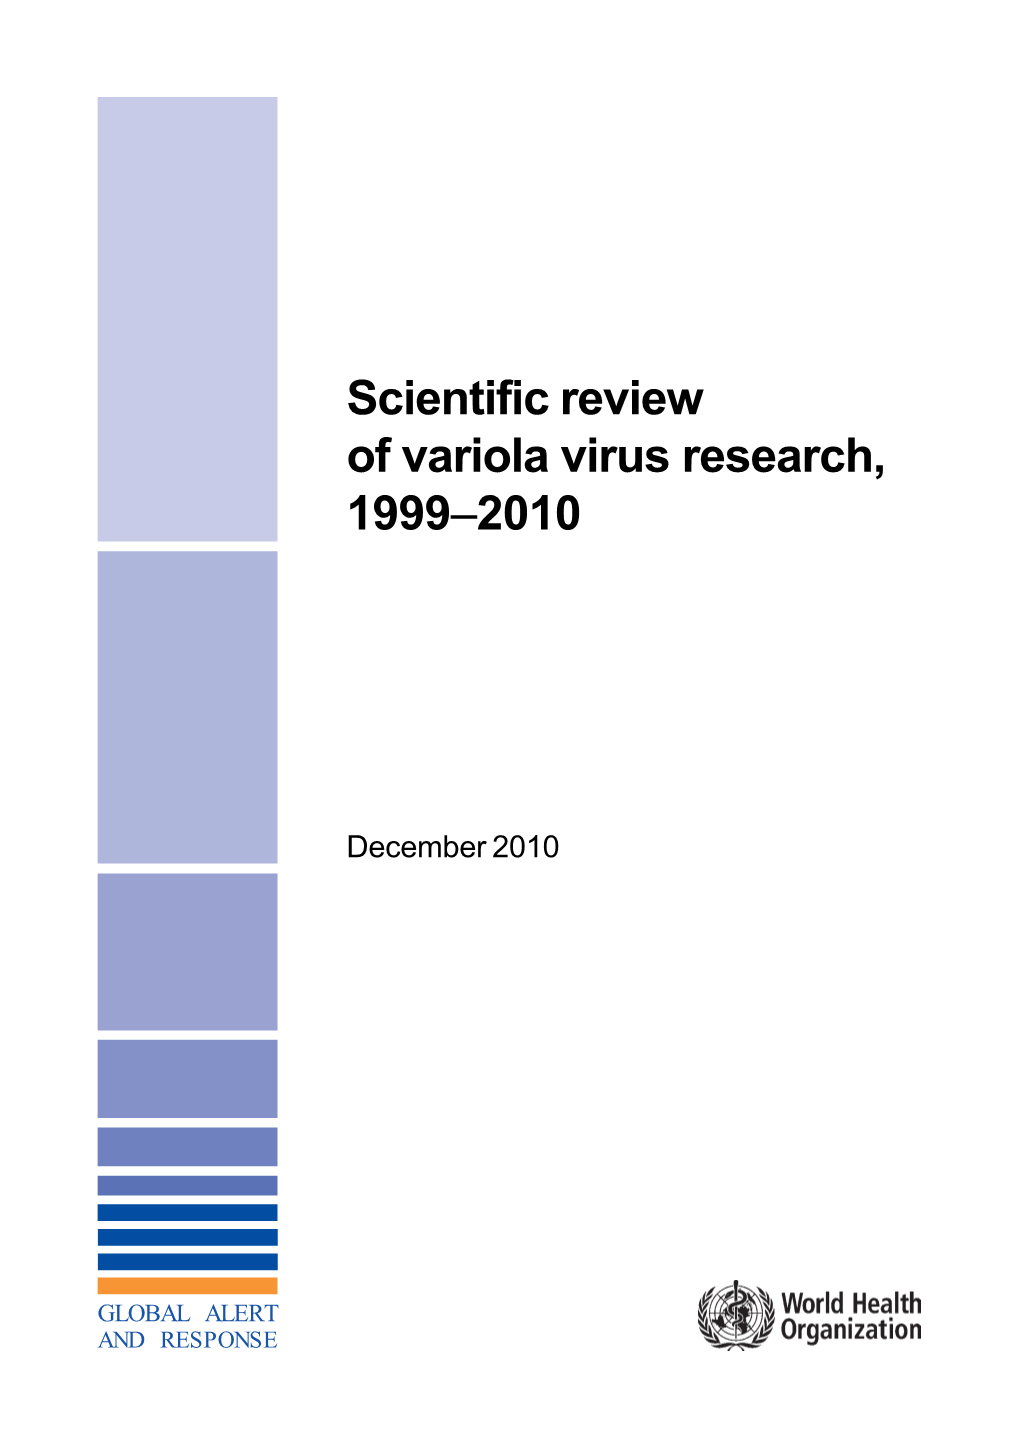 Scientific Review of Variola Virus Research, 1999–2010